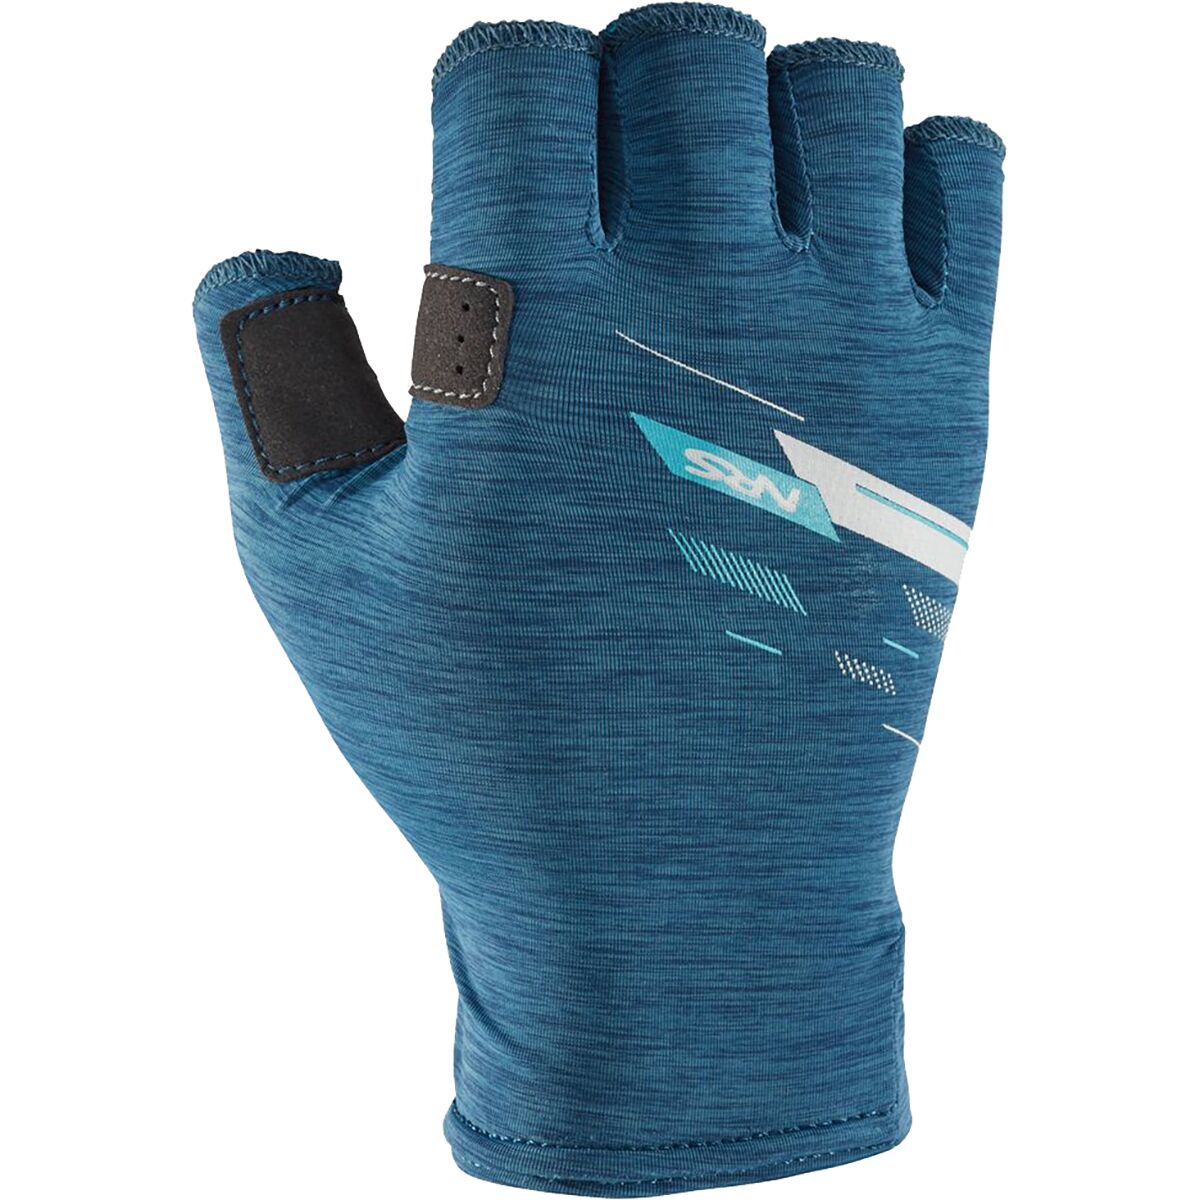 NRS Boater's Glove - Men's